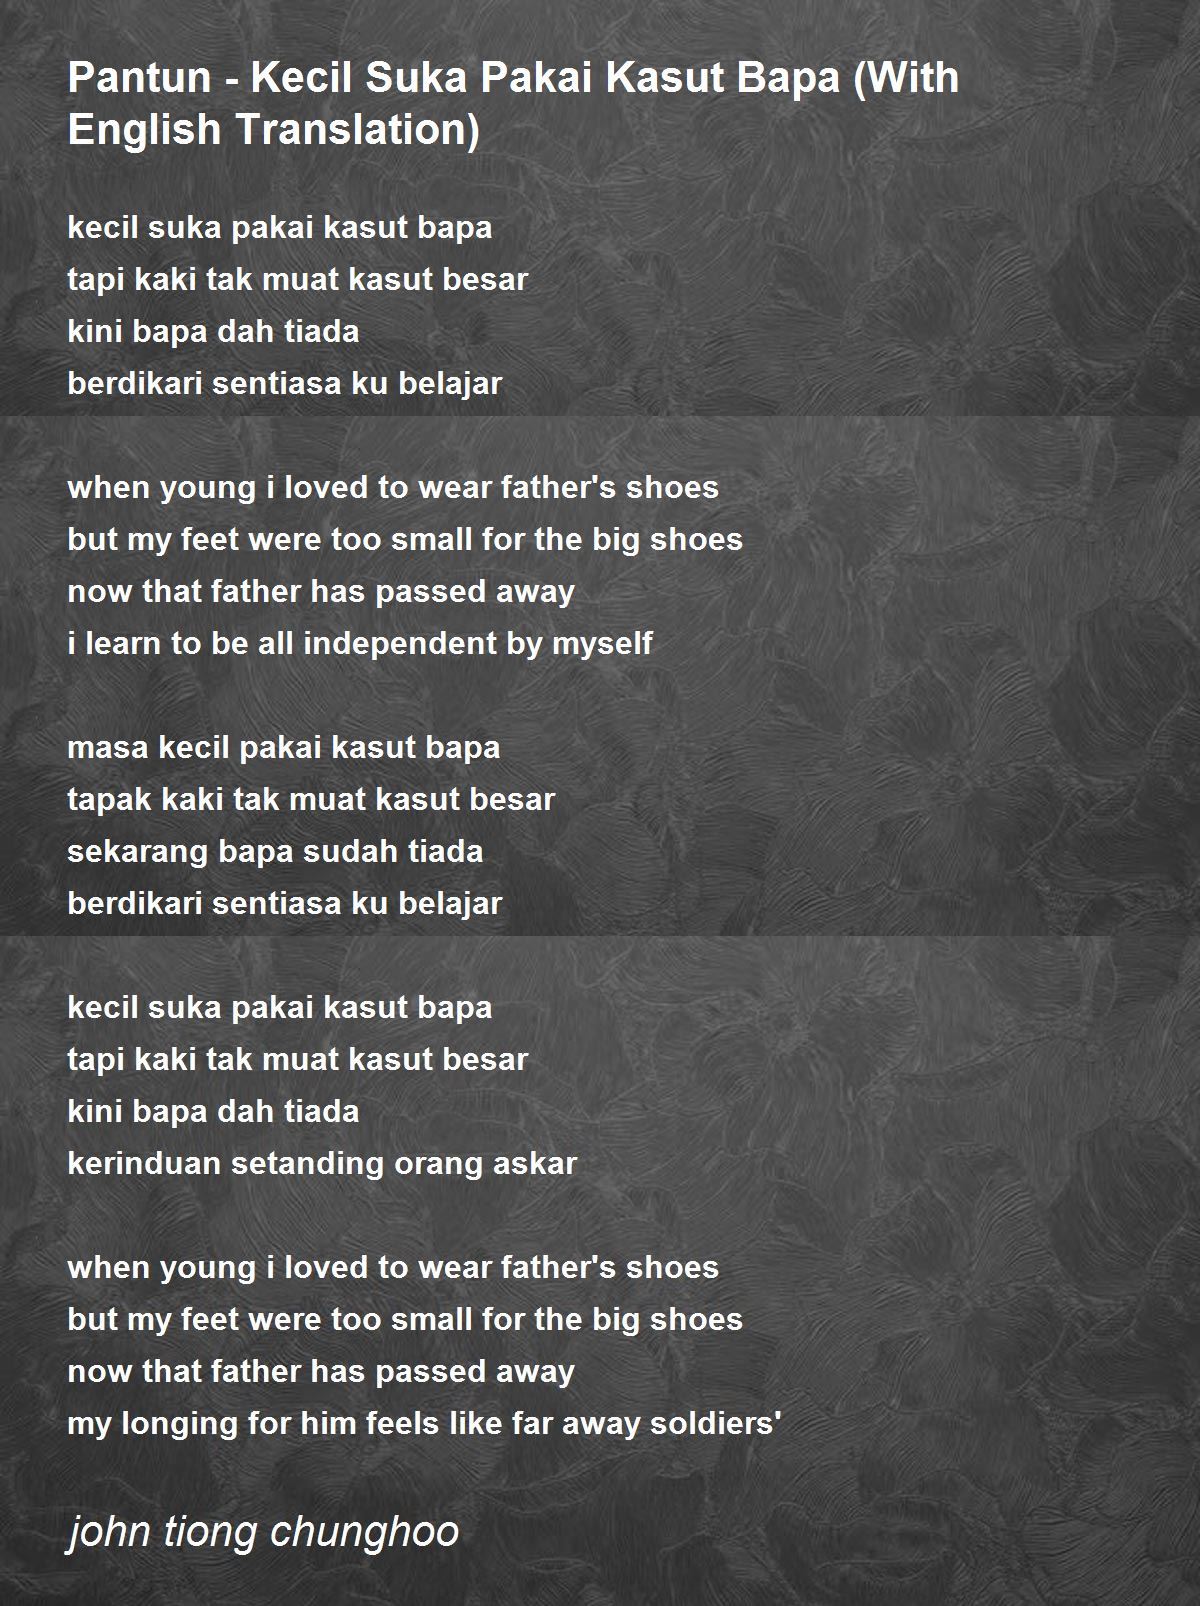 Pantun Kecil Suka Pakai Kasut Bapa With English Translation Poem By John Tiong Chunghoo Poem Hunter